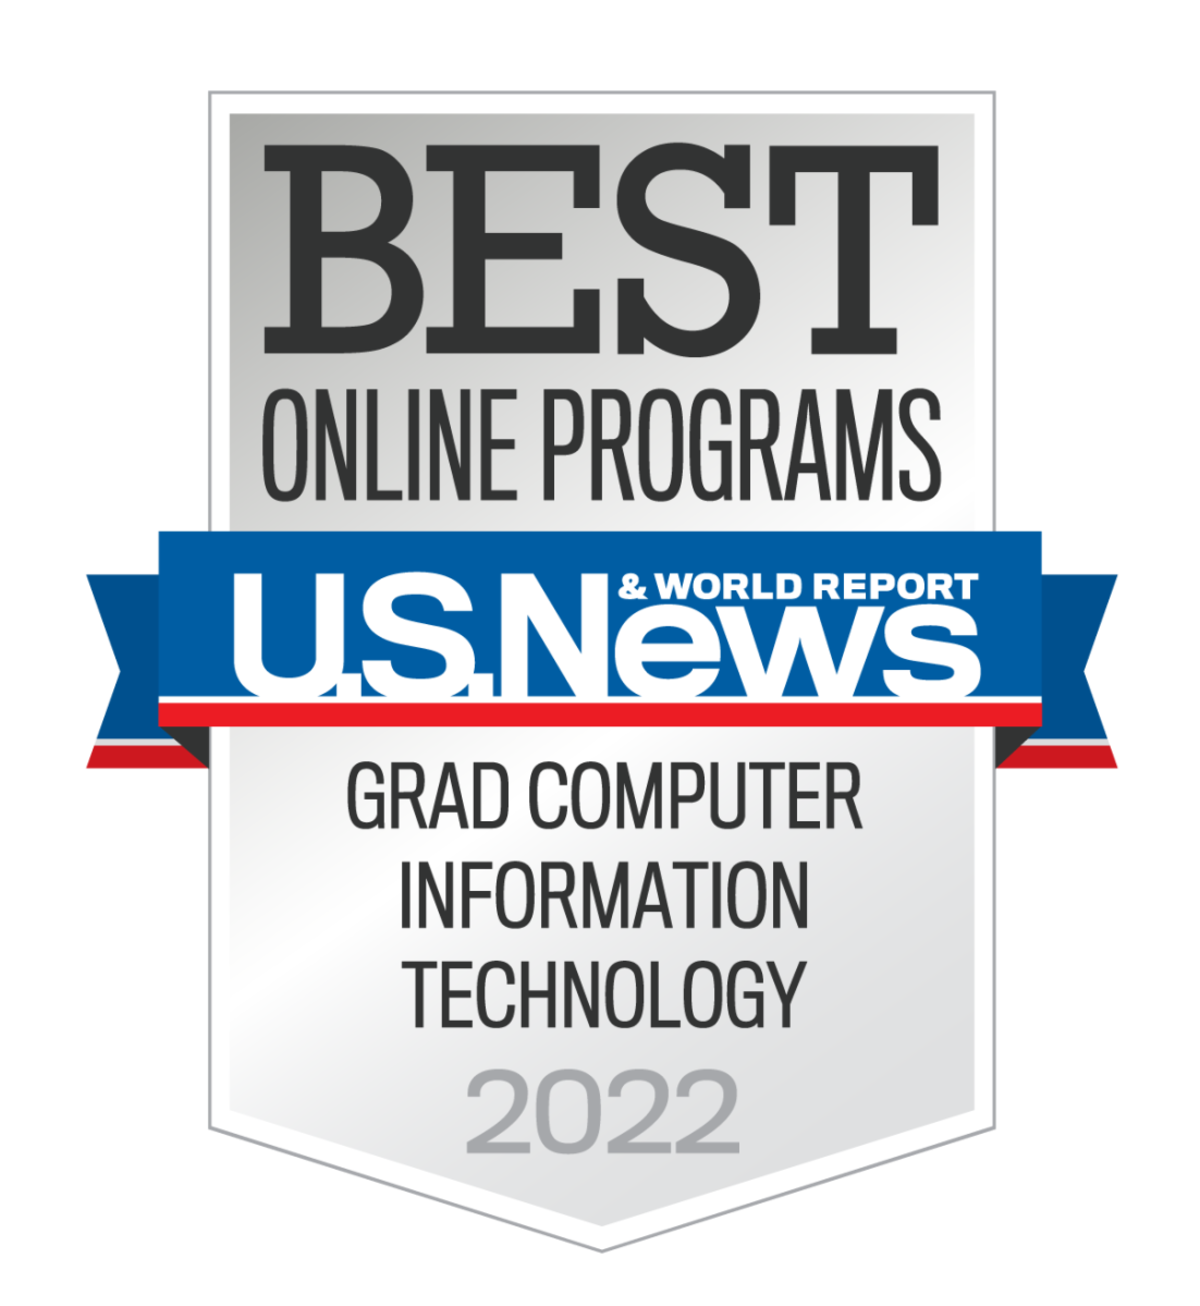 Best Online Programs 2022 - Grad Computer Info Technology Badge